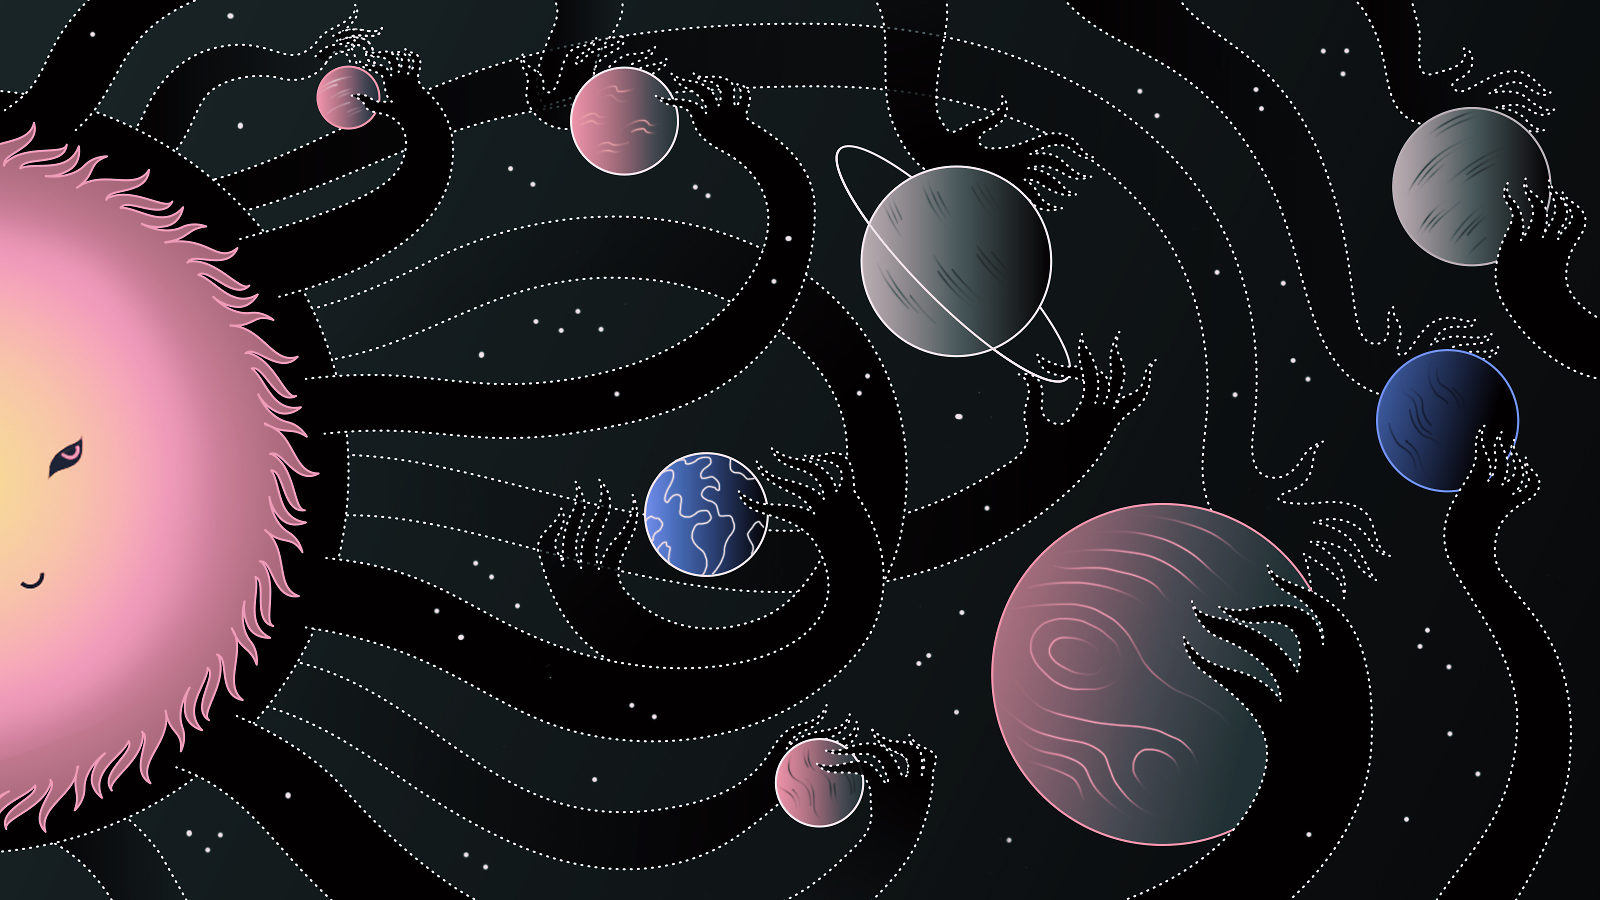 Illustration of the solar system